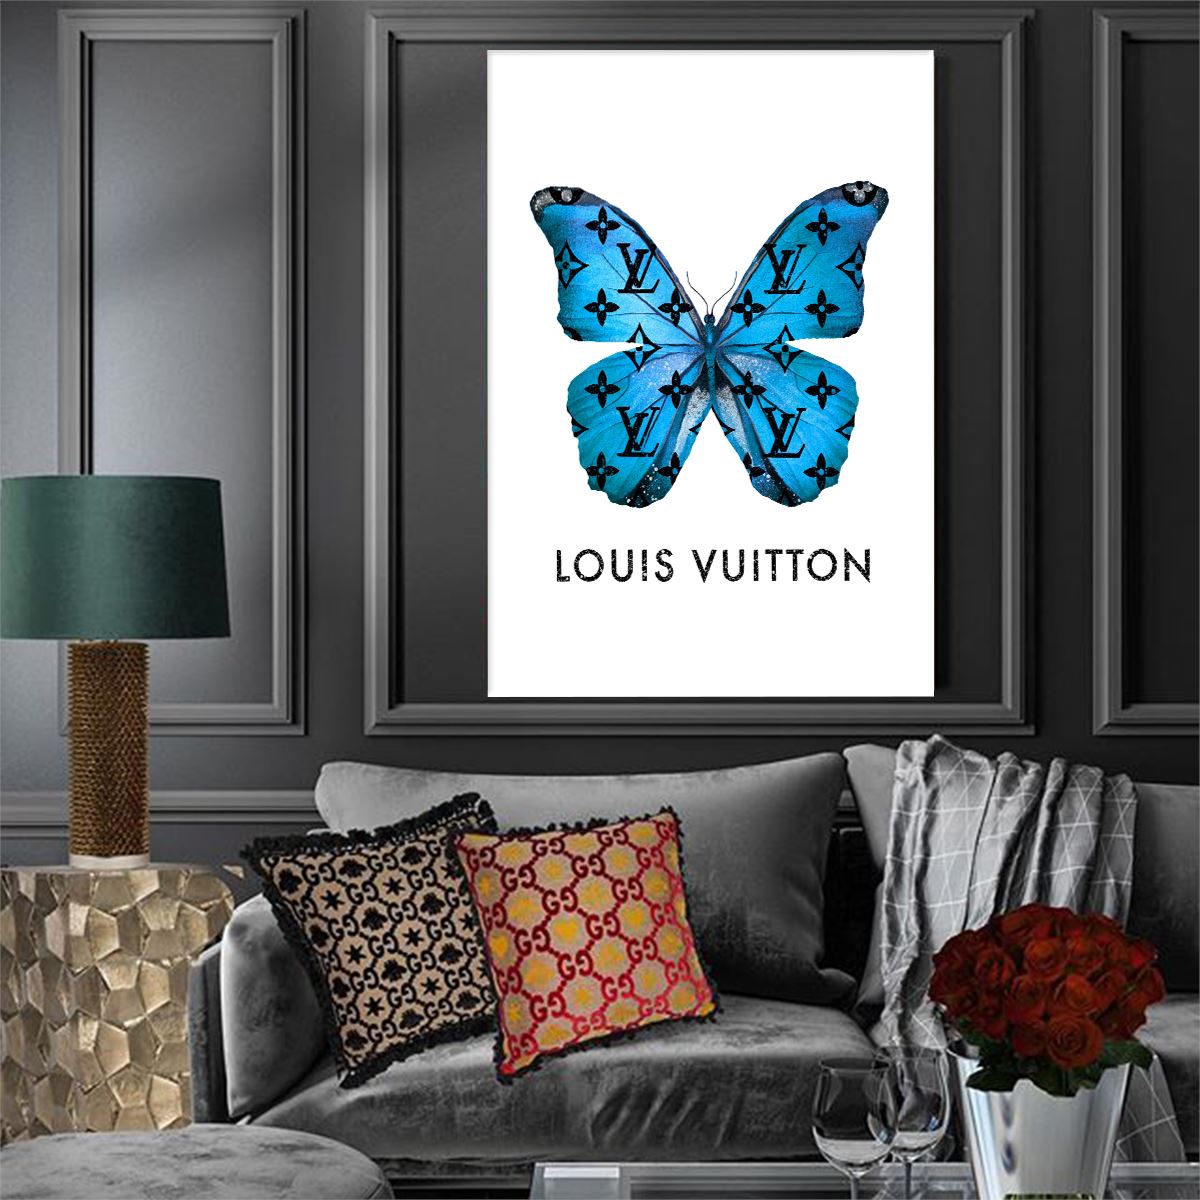 Louis Vuitton Butterfly by Jodi Print on Canvas - Bed Bath & Beyond -  35429770